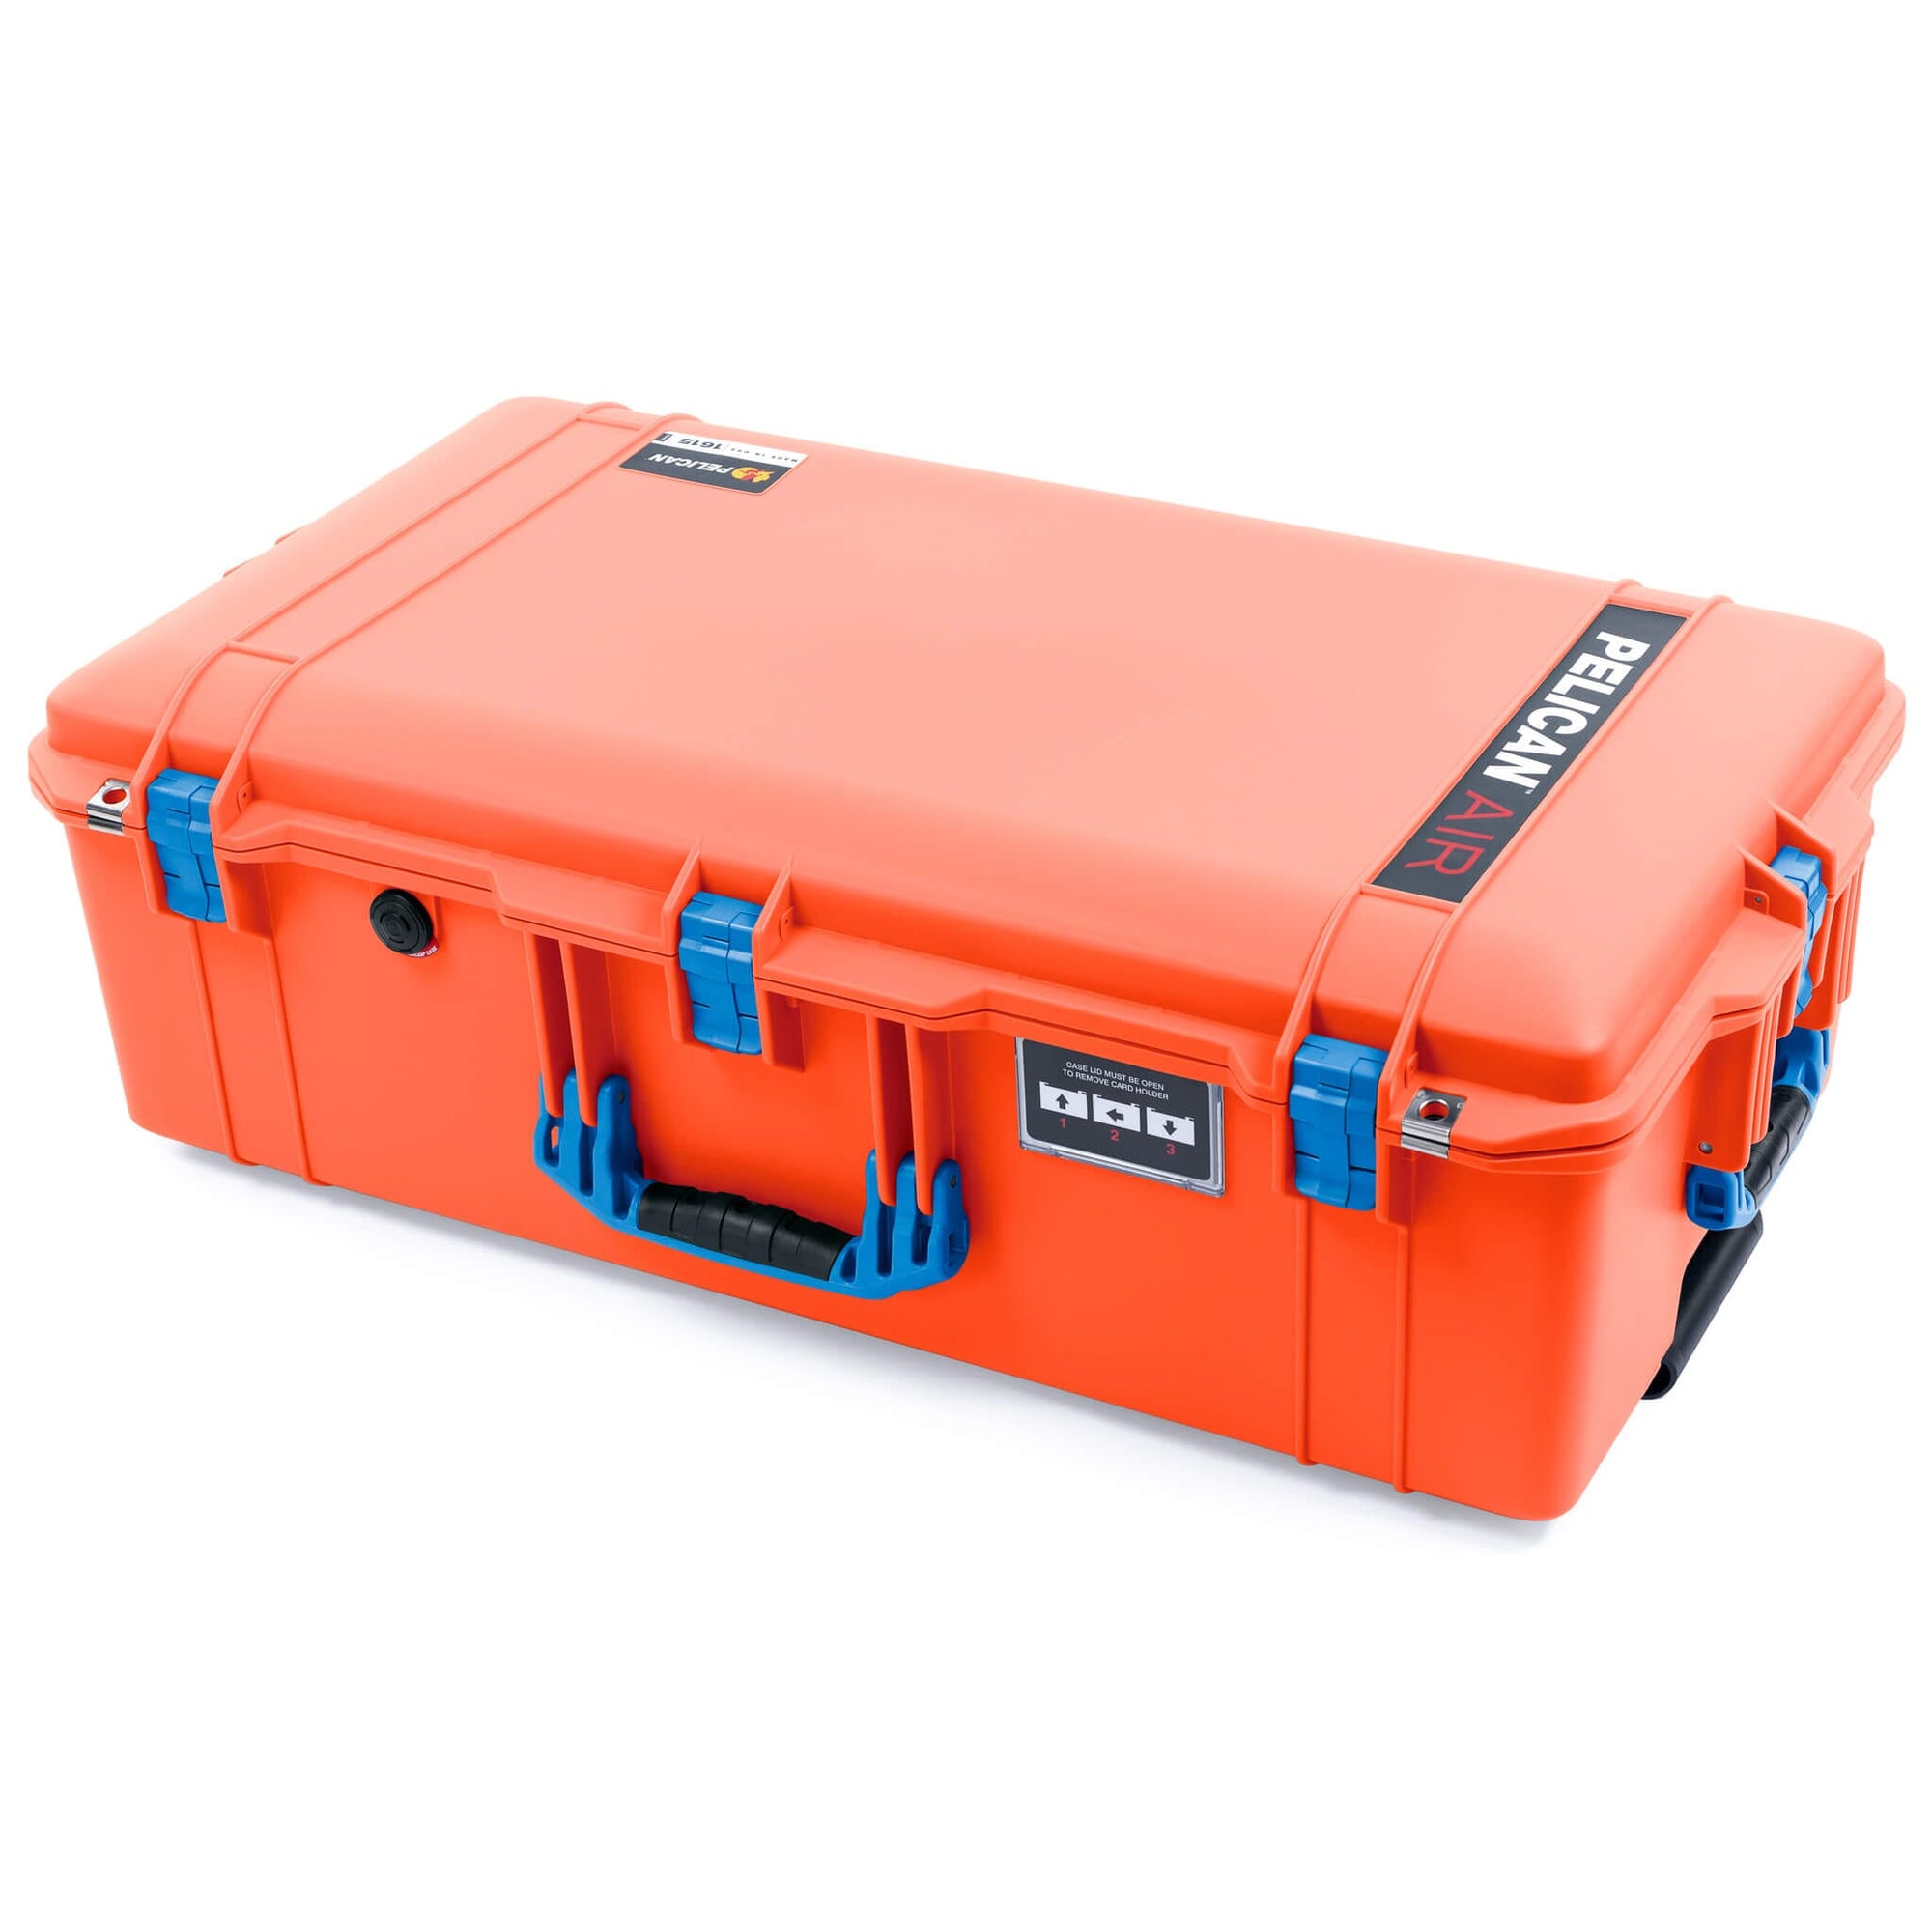 Pelican 1615 Air Case, Orange with Blue Handles & Latches ColorCase 